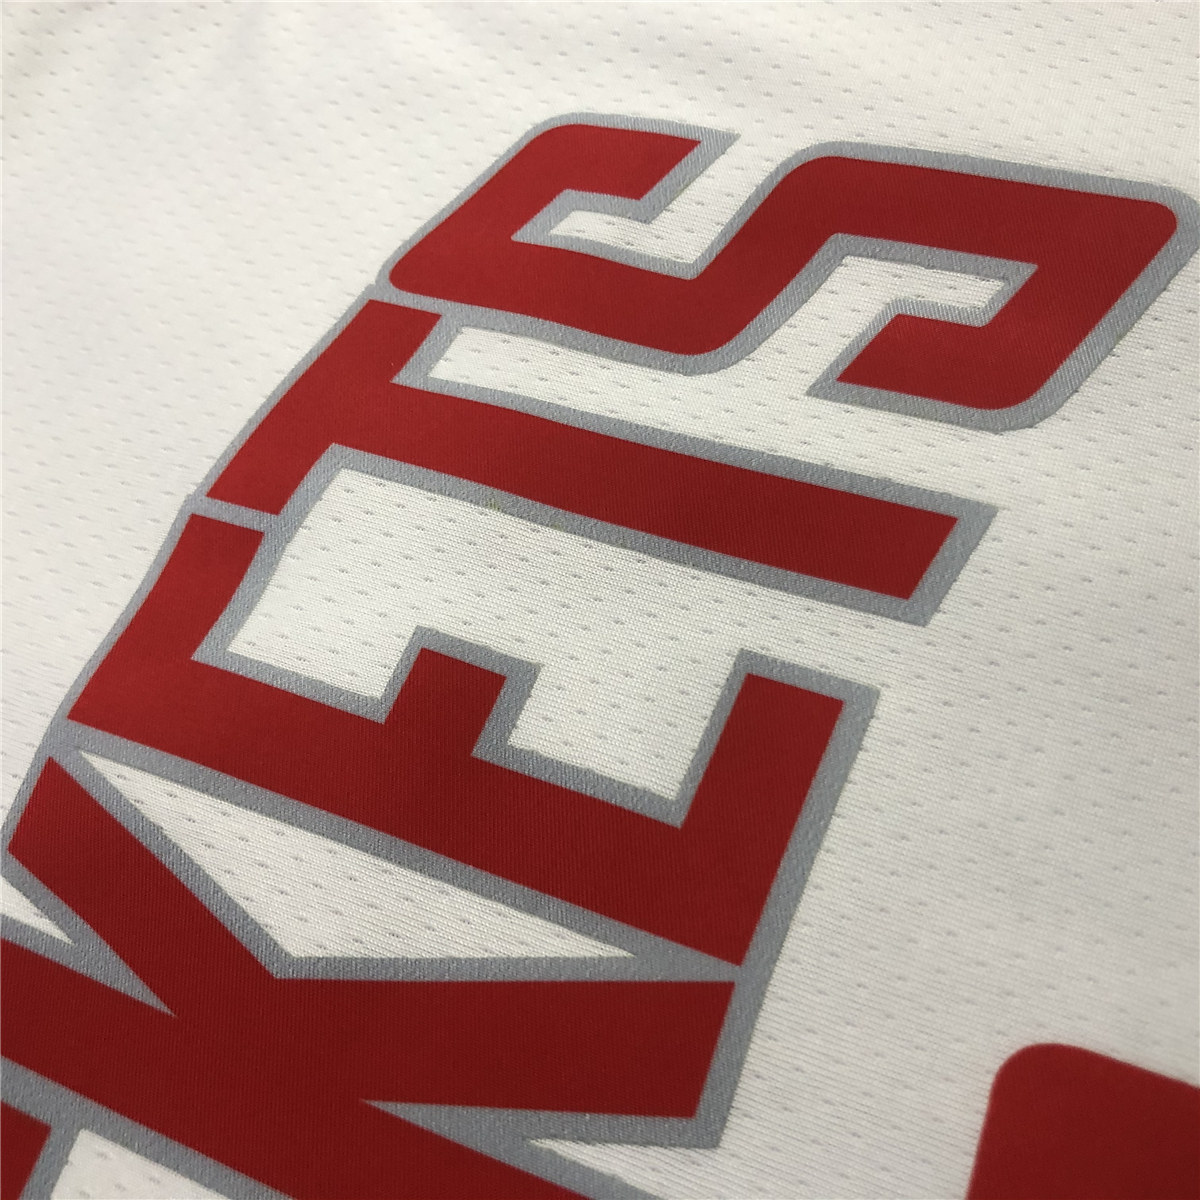 Houston Rockets Red-White Swingman Jersey Mens 2020/21 Association Editiona